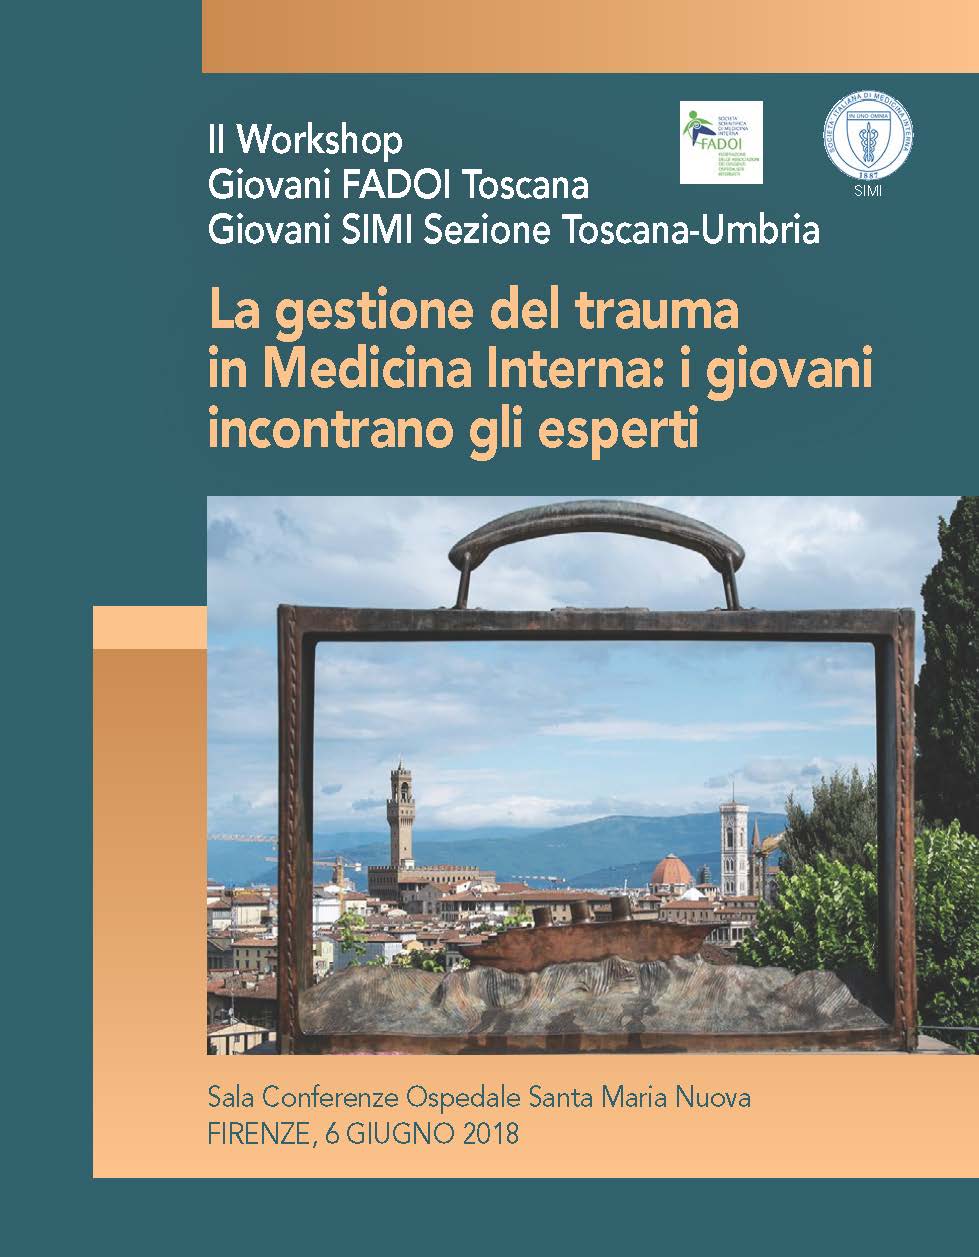 II Workshop Giovani FADOI Toscana-Giovani SIMI Sezione Toscana-Umbria